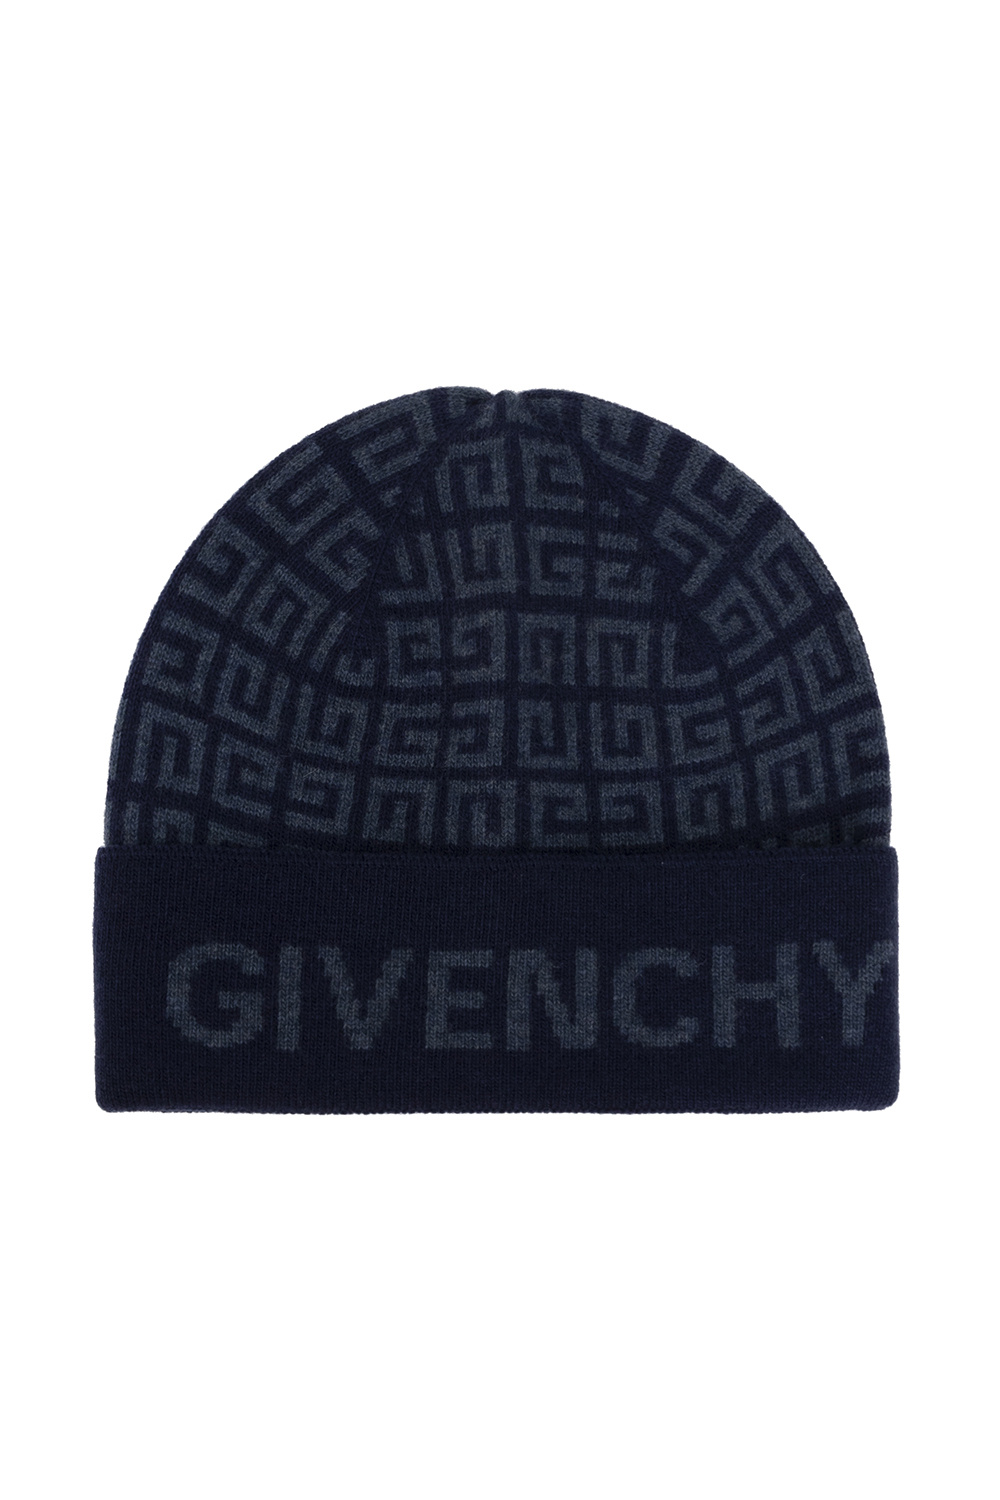 Givenchy bolso tote de Givenchy